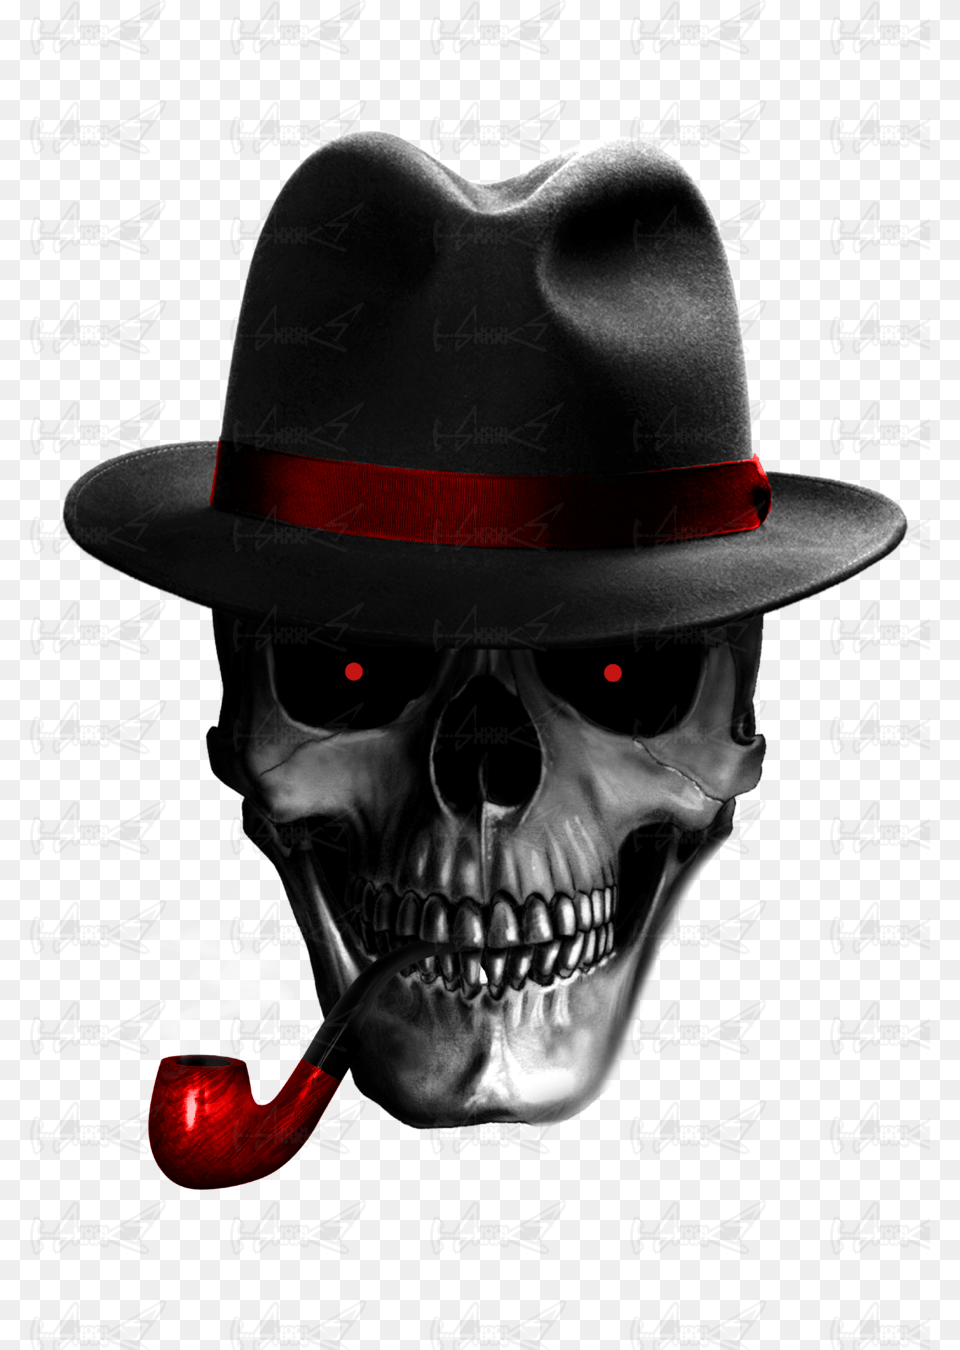 Skull Mafia Mafia, Clothing, Hat, Smoke Pipe, Adult Png